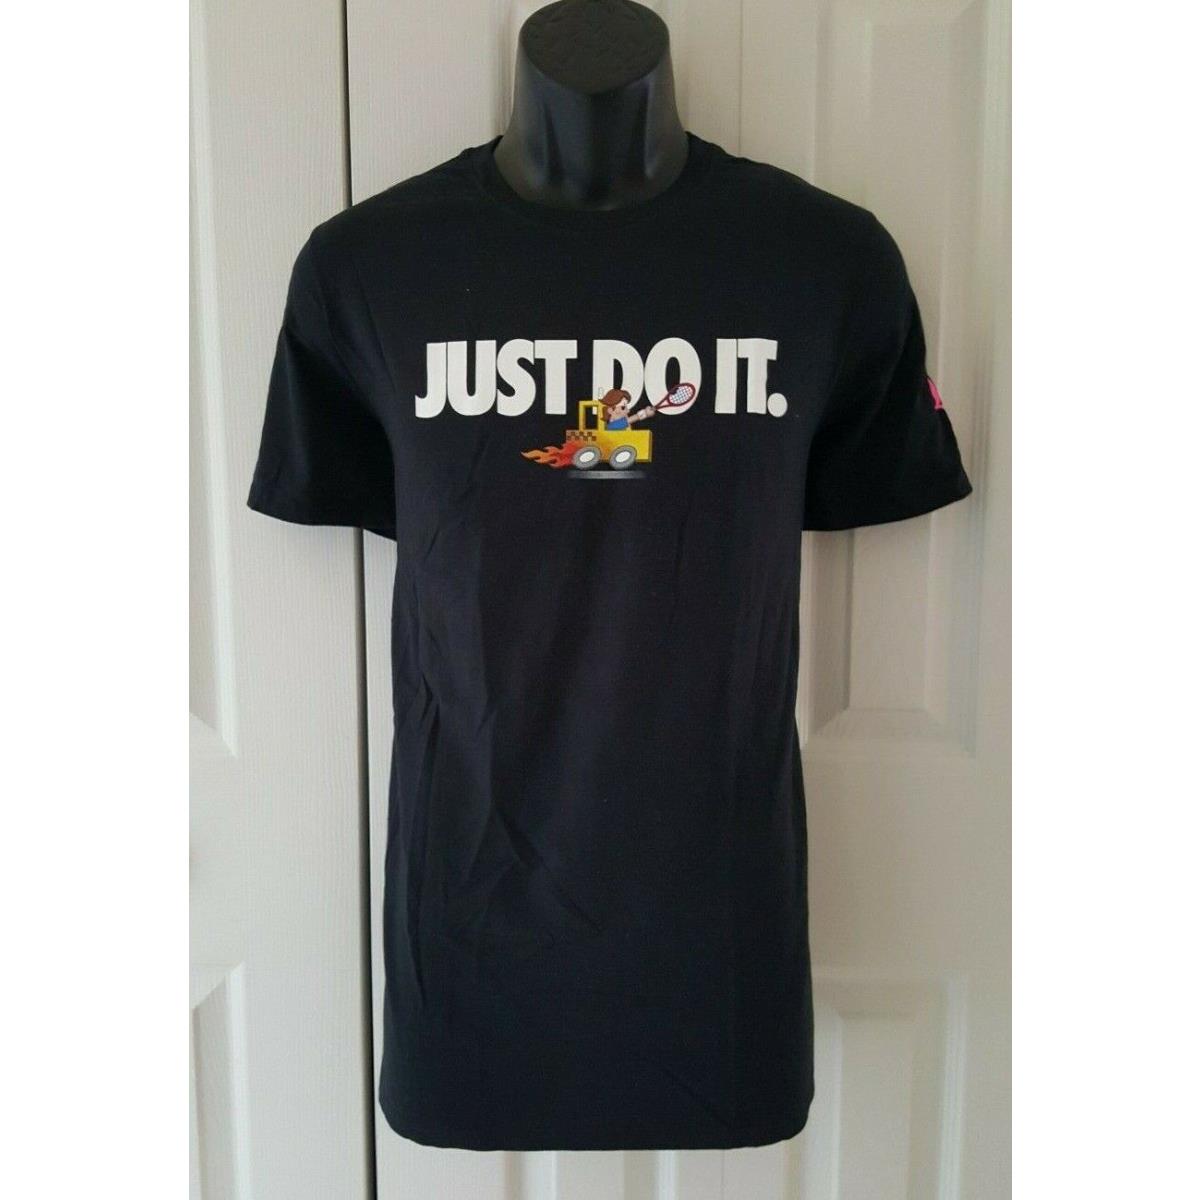 Mens Nike Federer RF Just DO IT Tennis T-shirt Black 889146-010